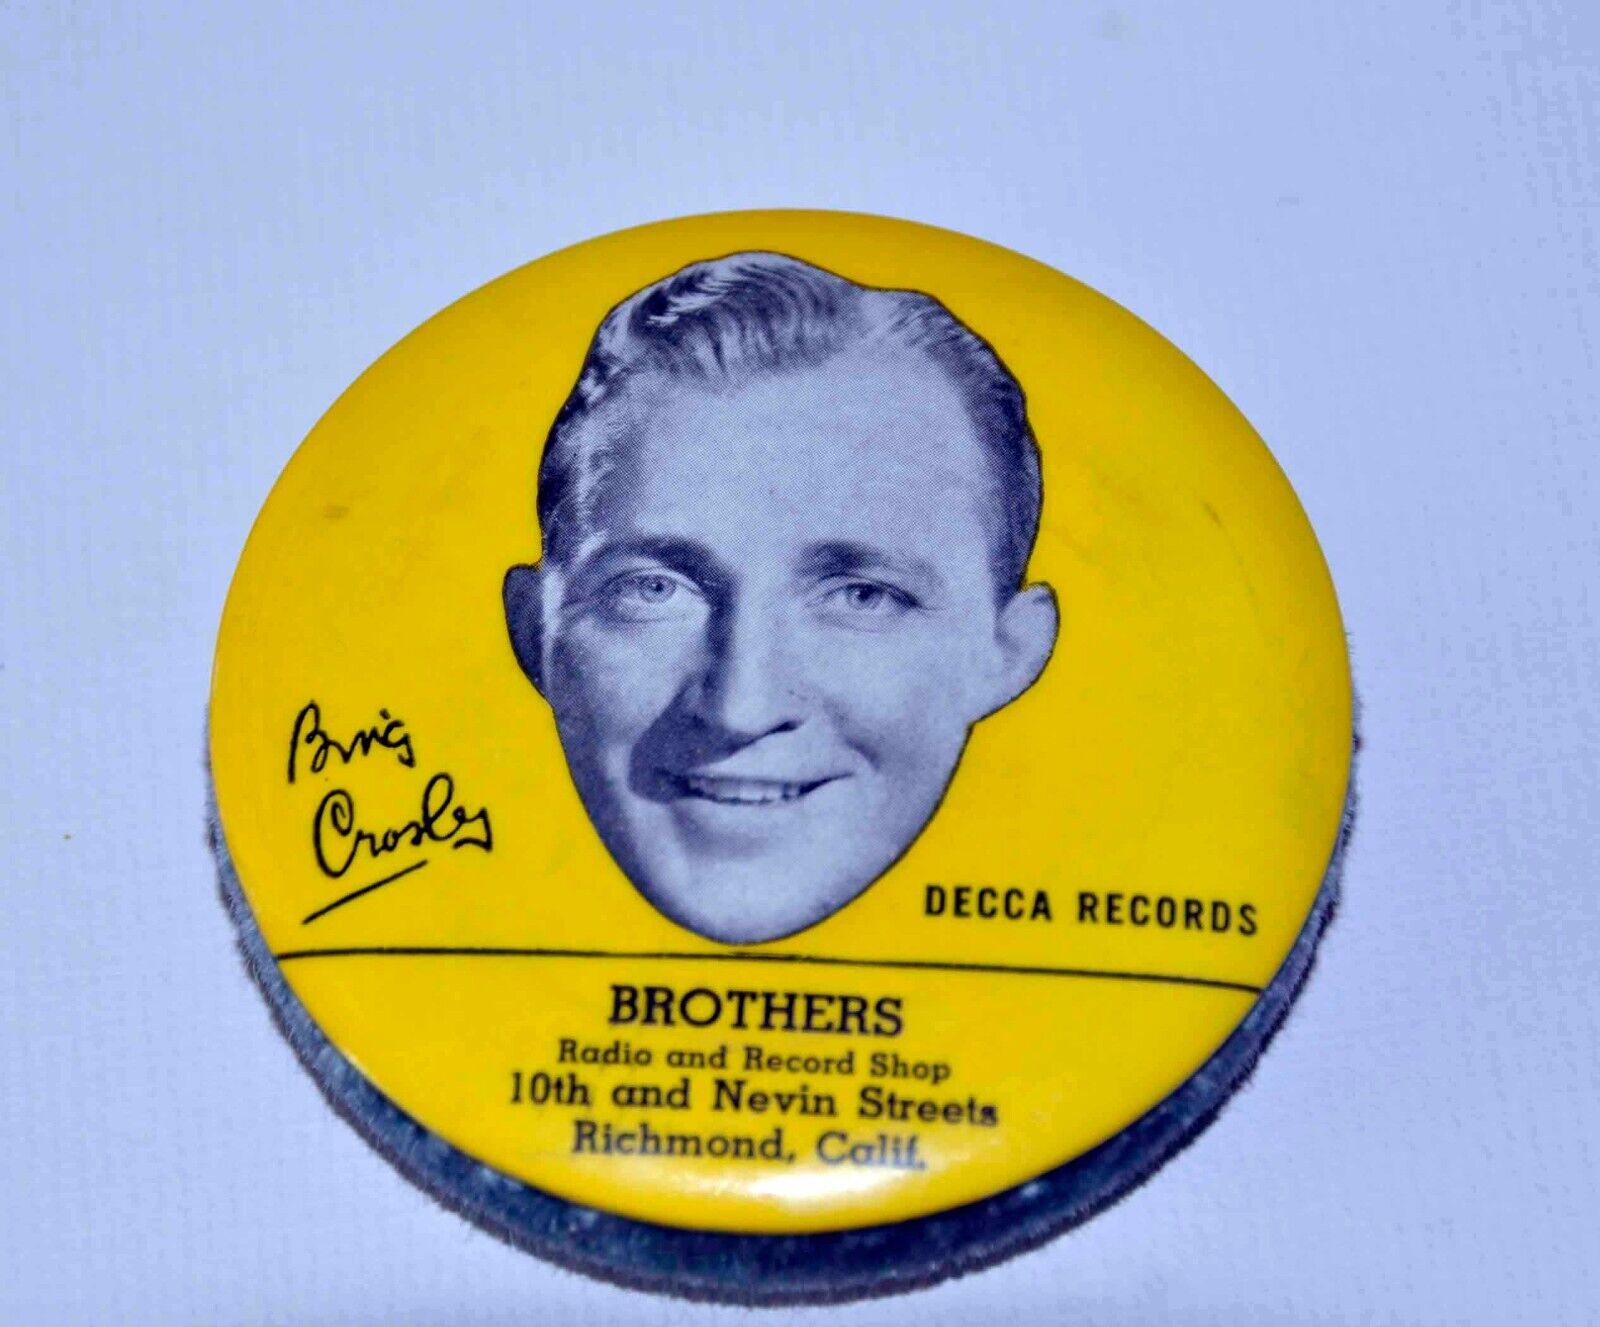 Vintage Bing Crosby Decca Records Vinyl Records Cleaner, Richmond, California